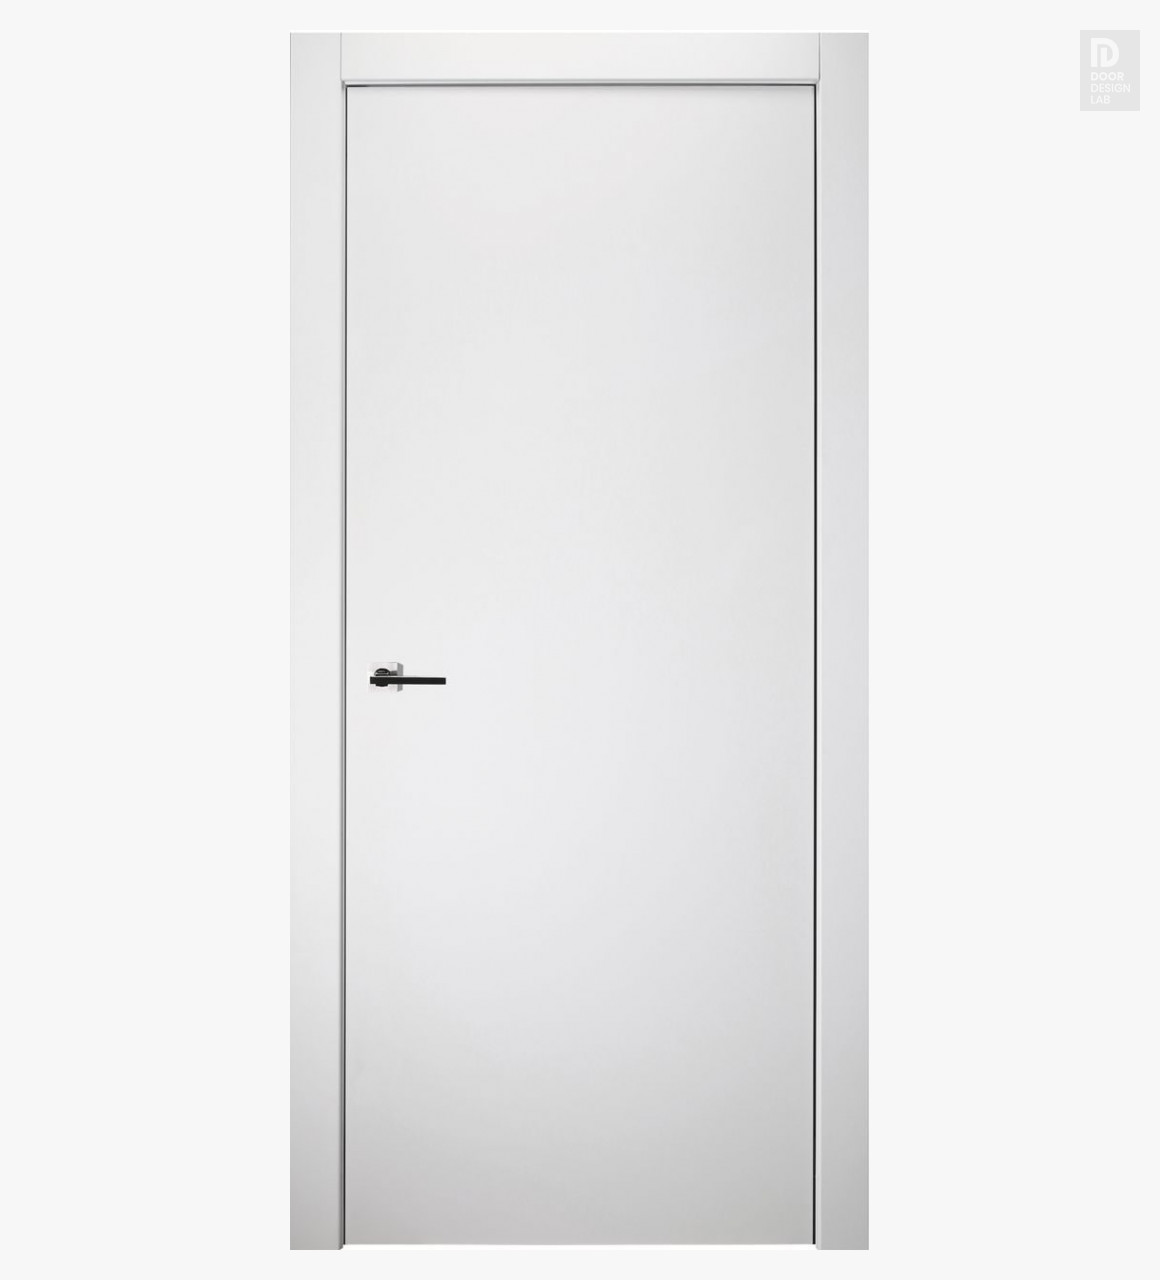 interior door Optima Snow White for $275.00, Solid core, No glass, 1 3/4 at Door Design Lab